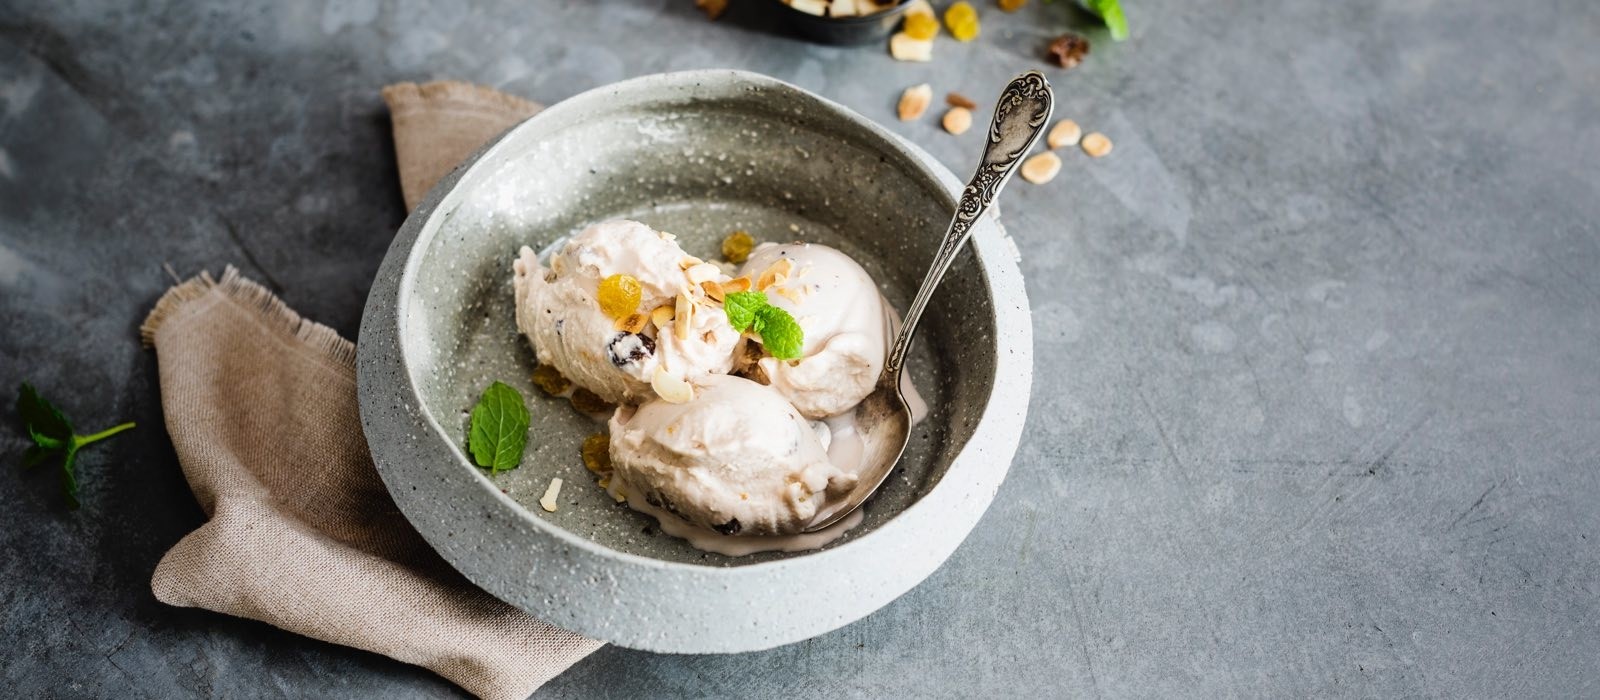 Import-Recipe - Yogurt and honey ice cream with roasted almonds